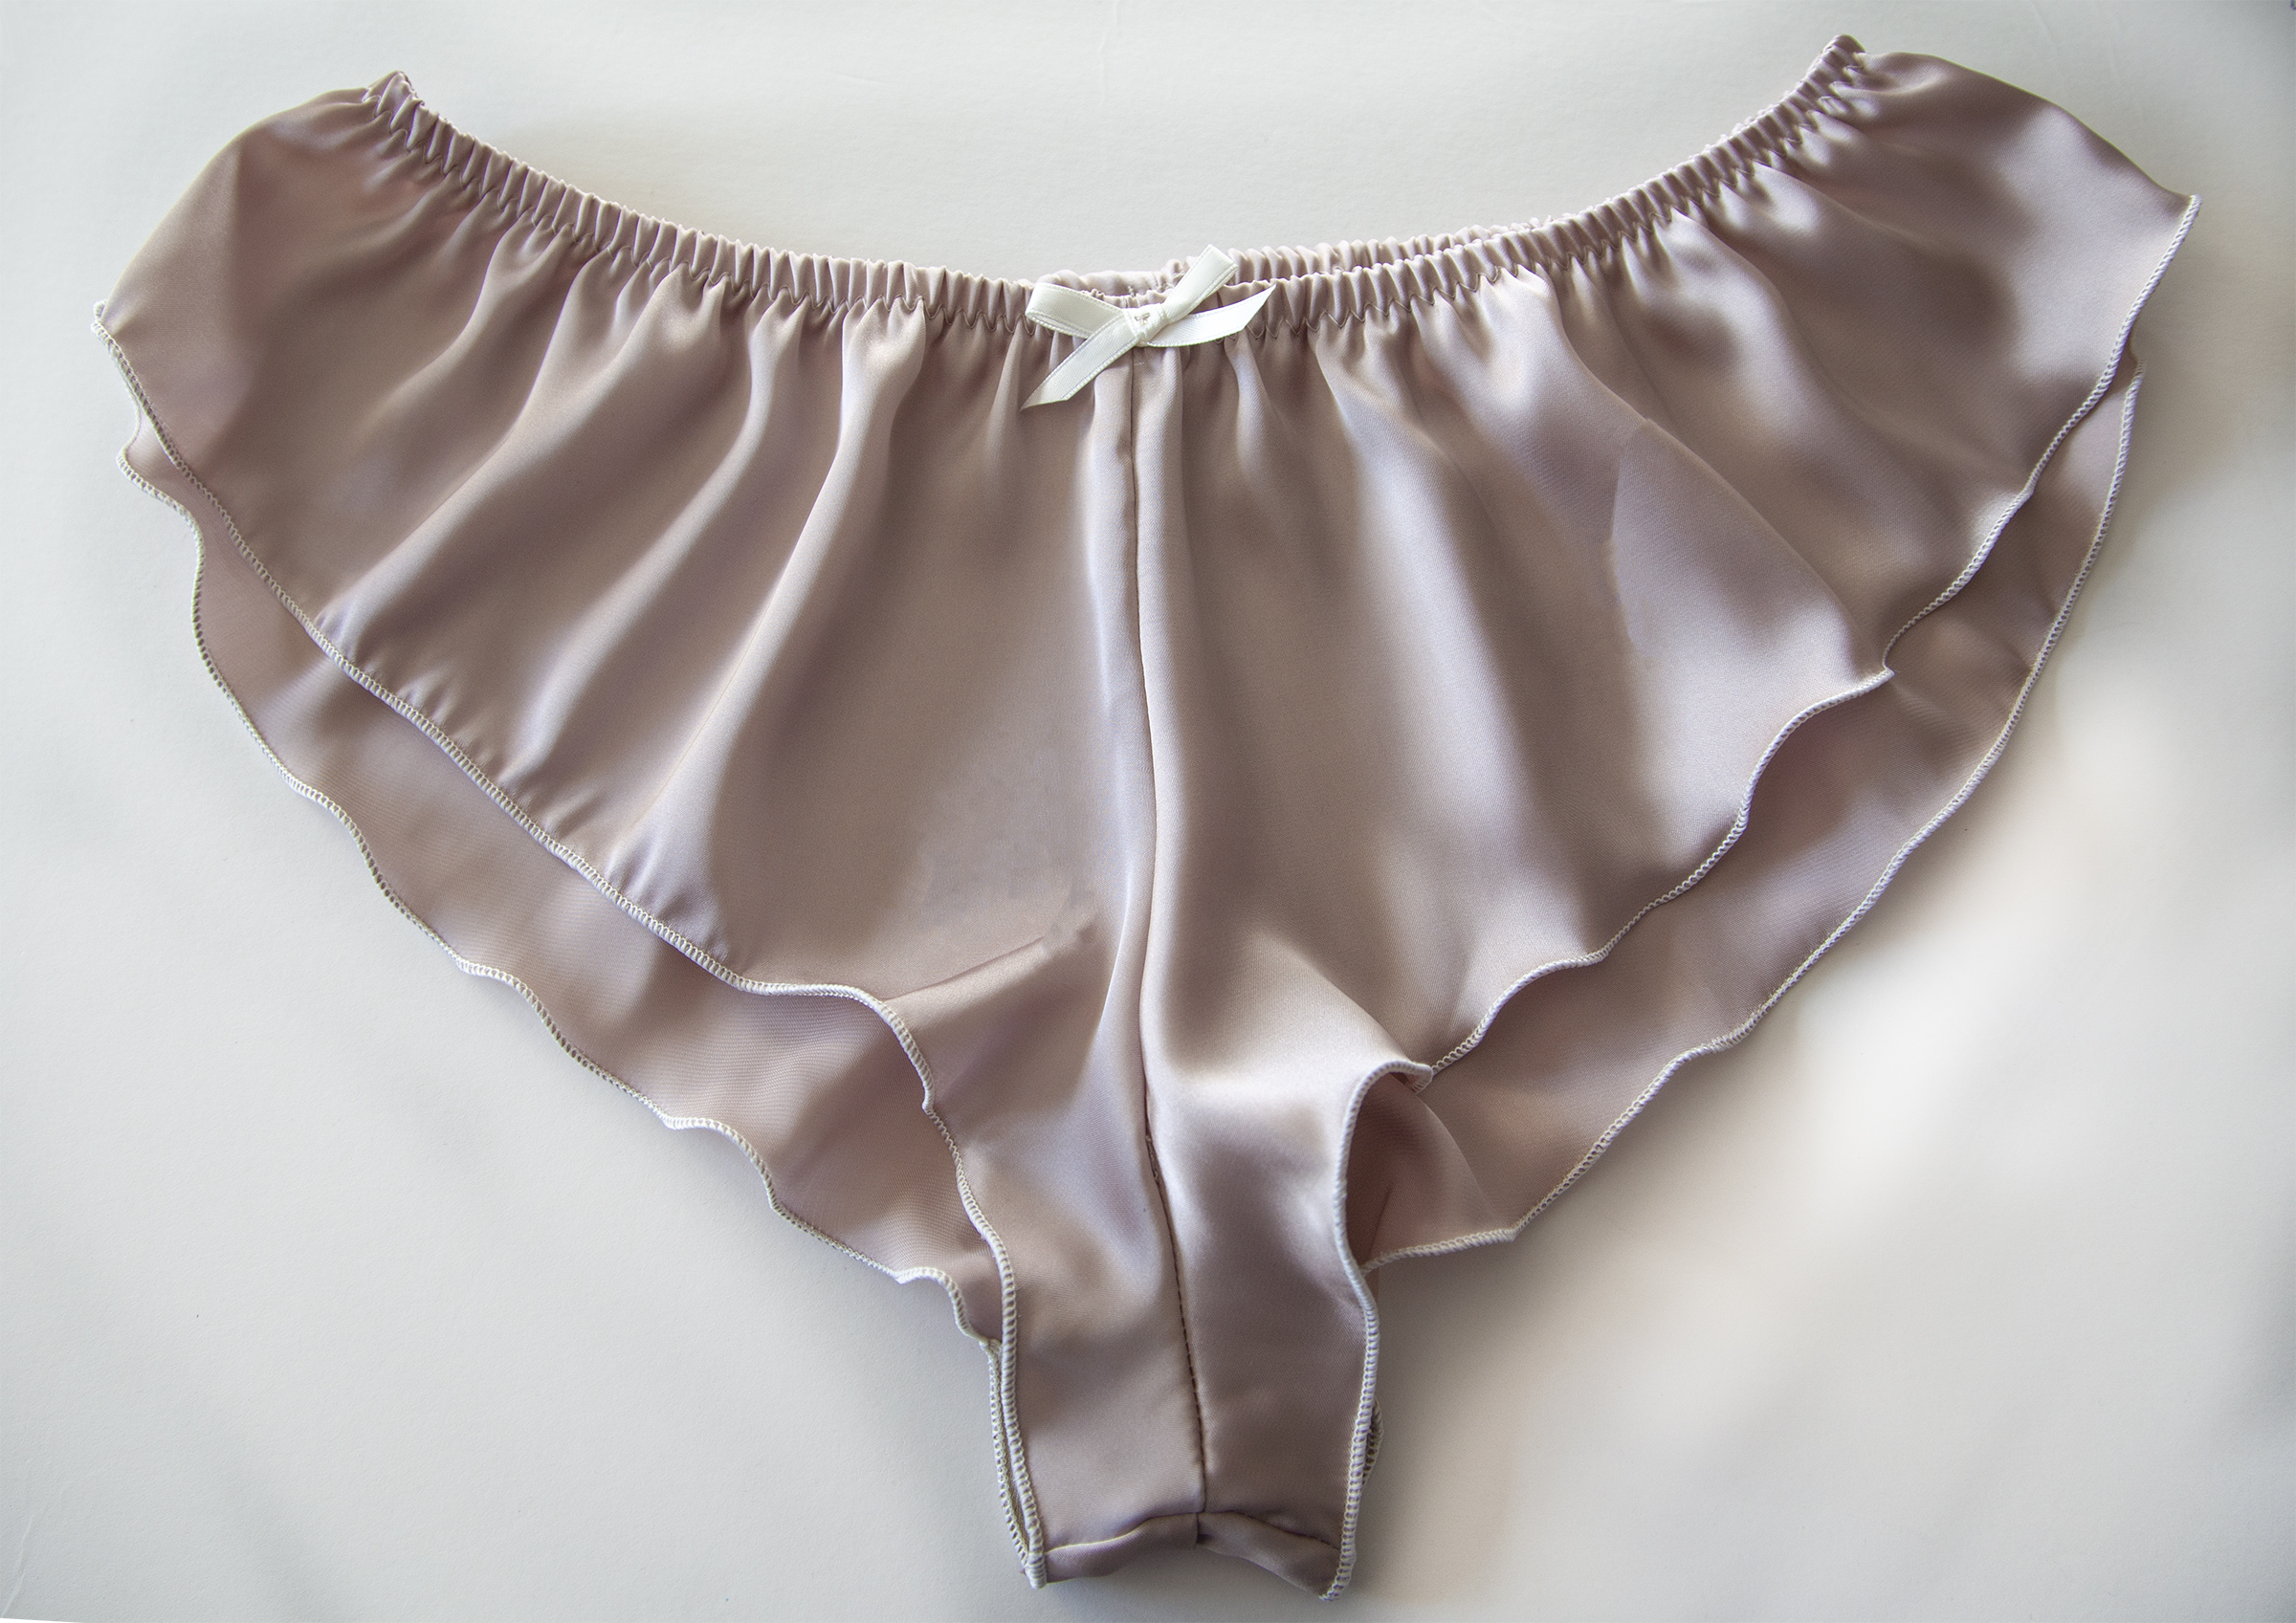 Silk panties tumblr